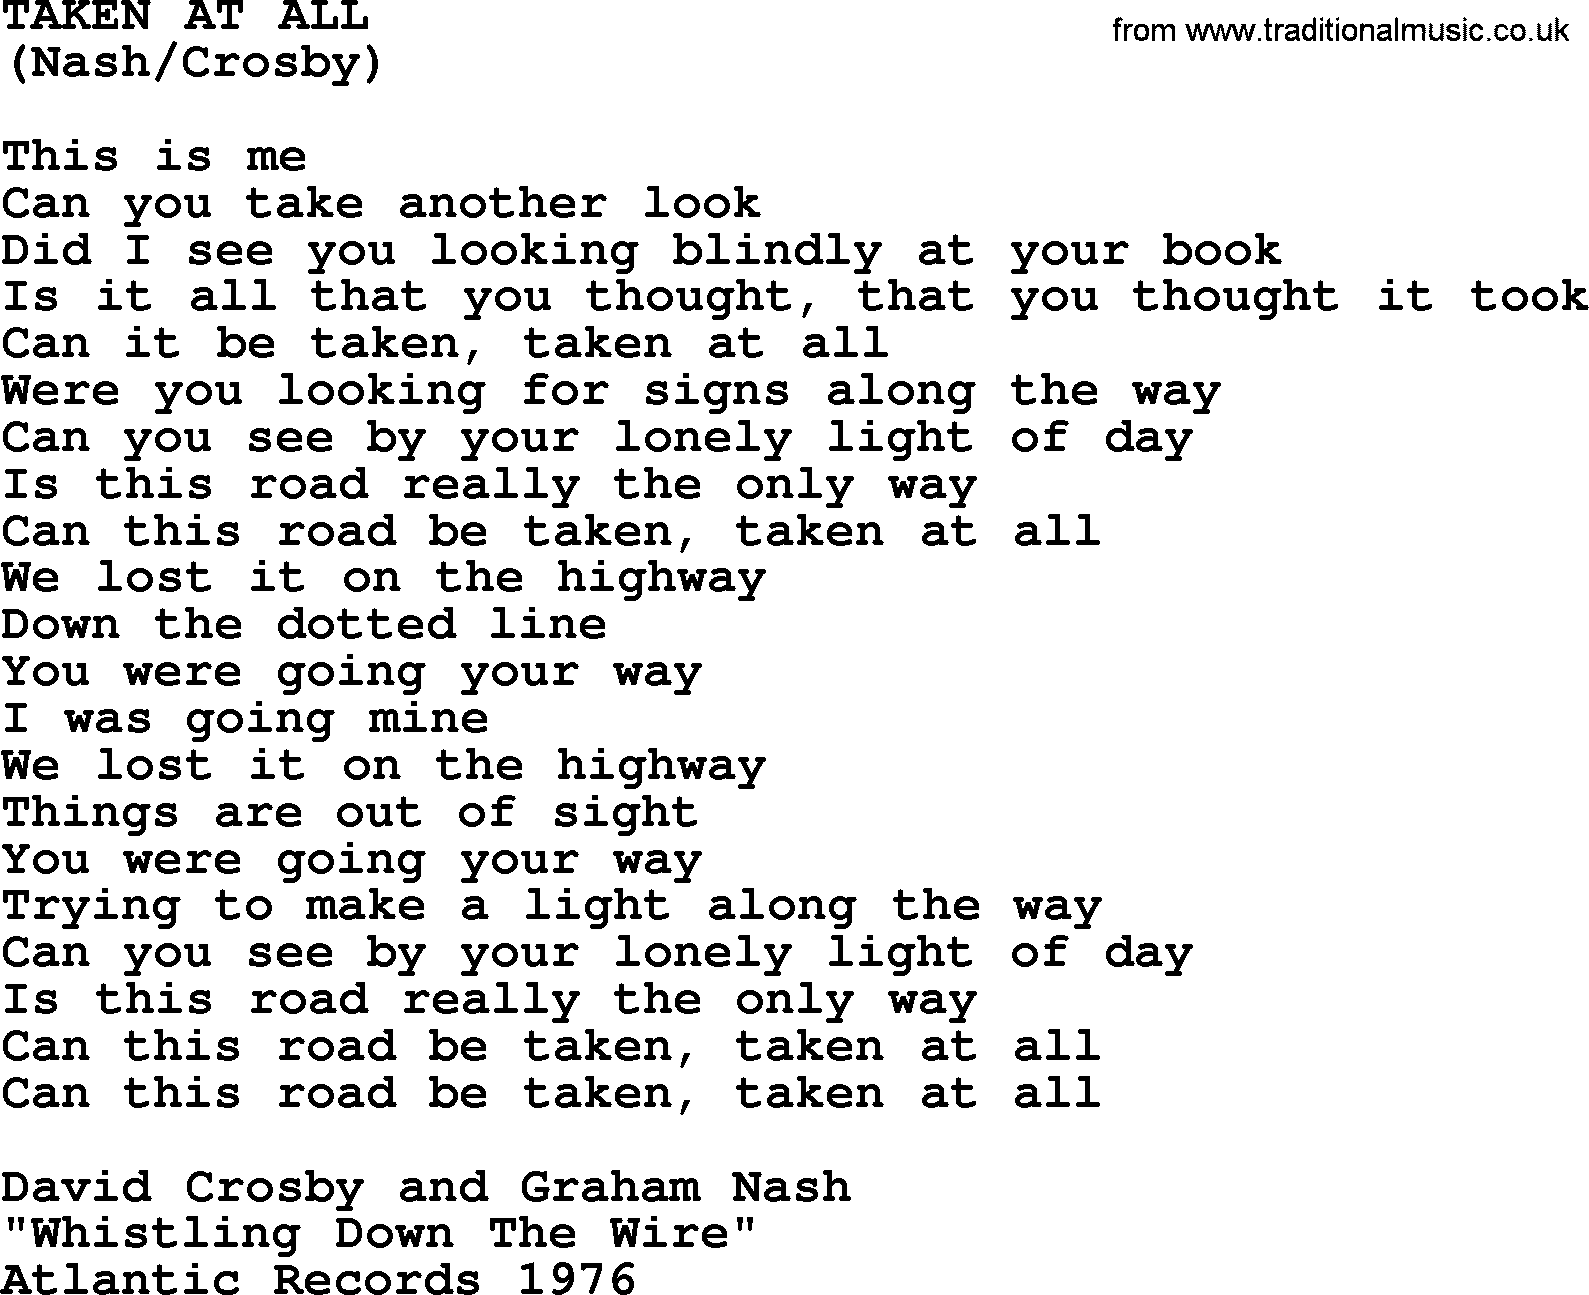 The Byrds song Taken At All, lyrics